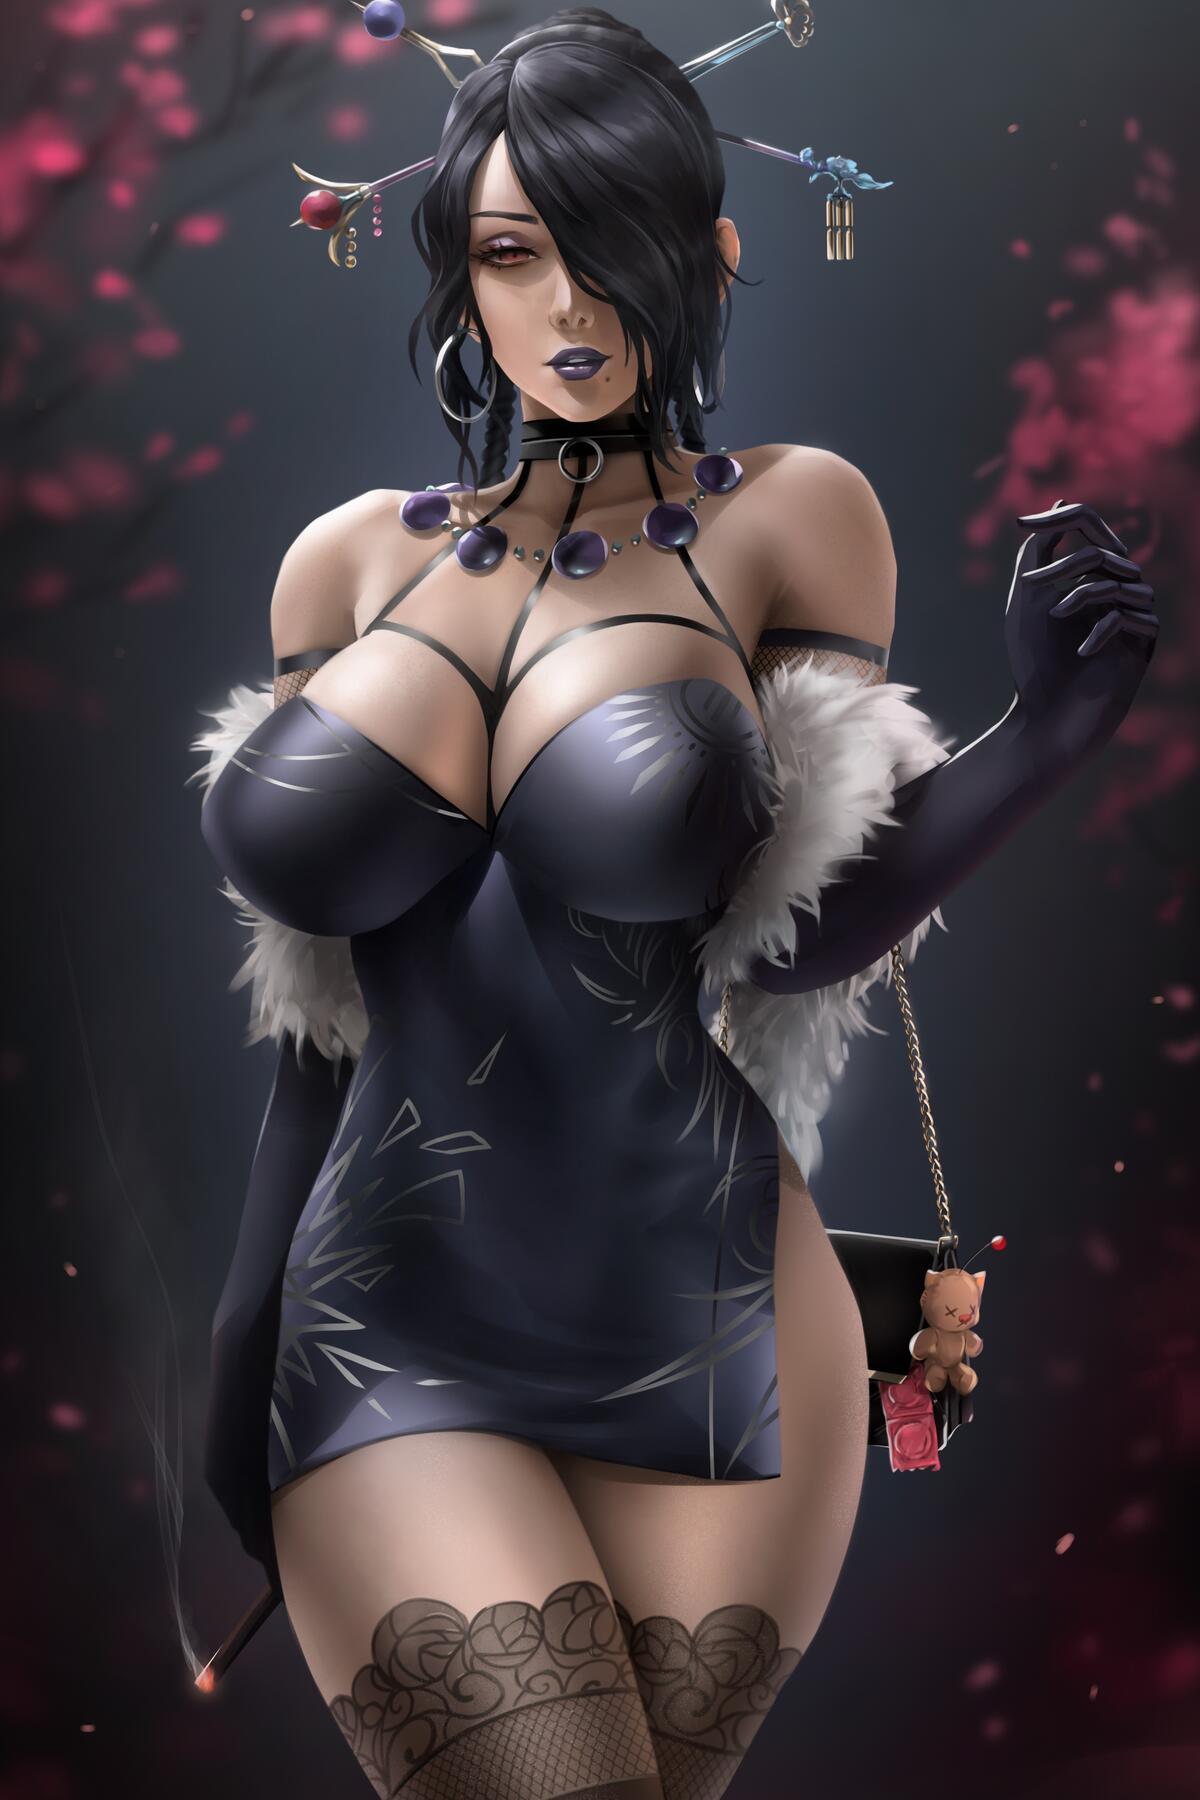 Sexy geisha in a hot black dress